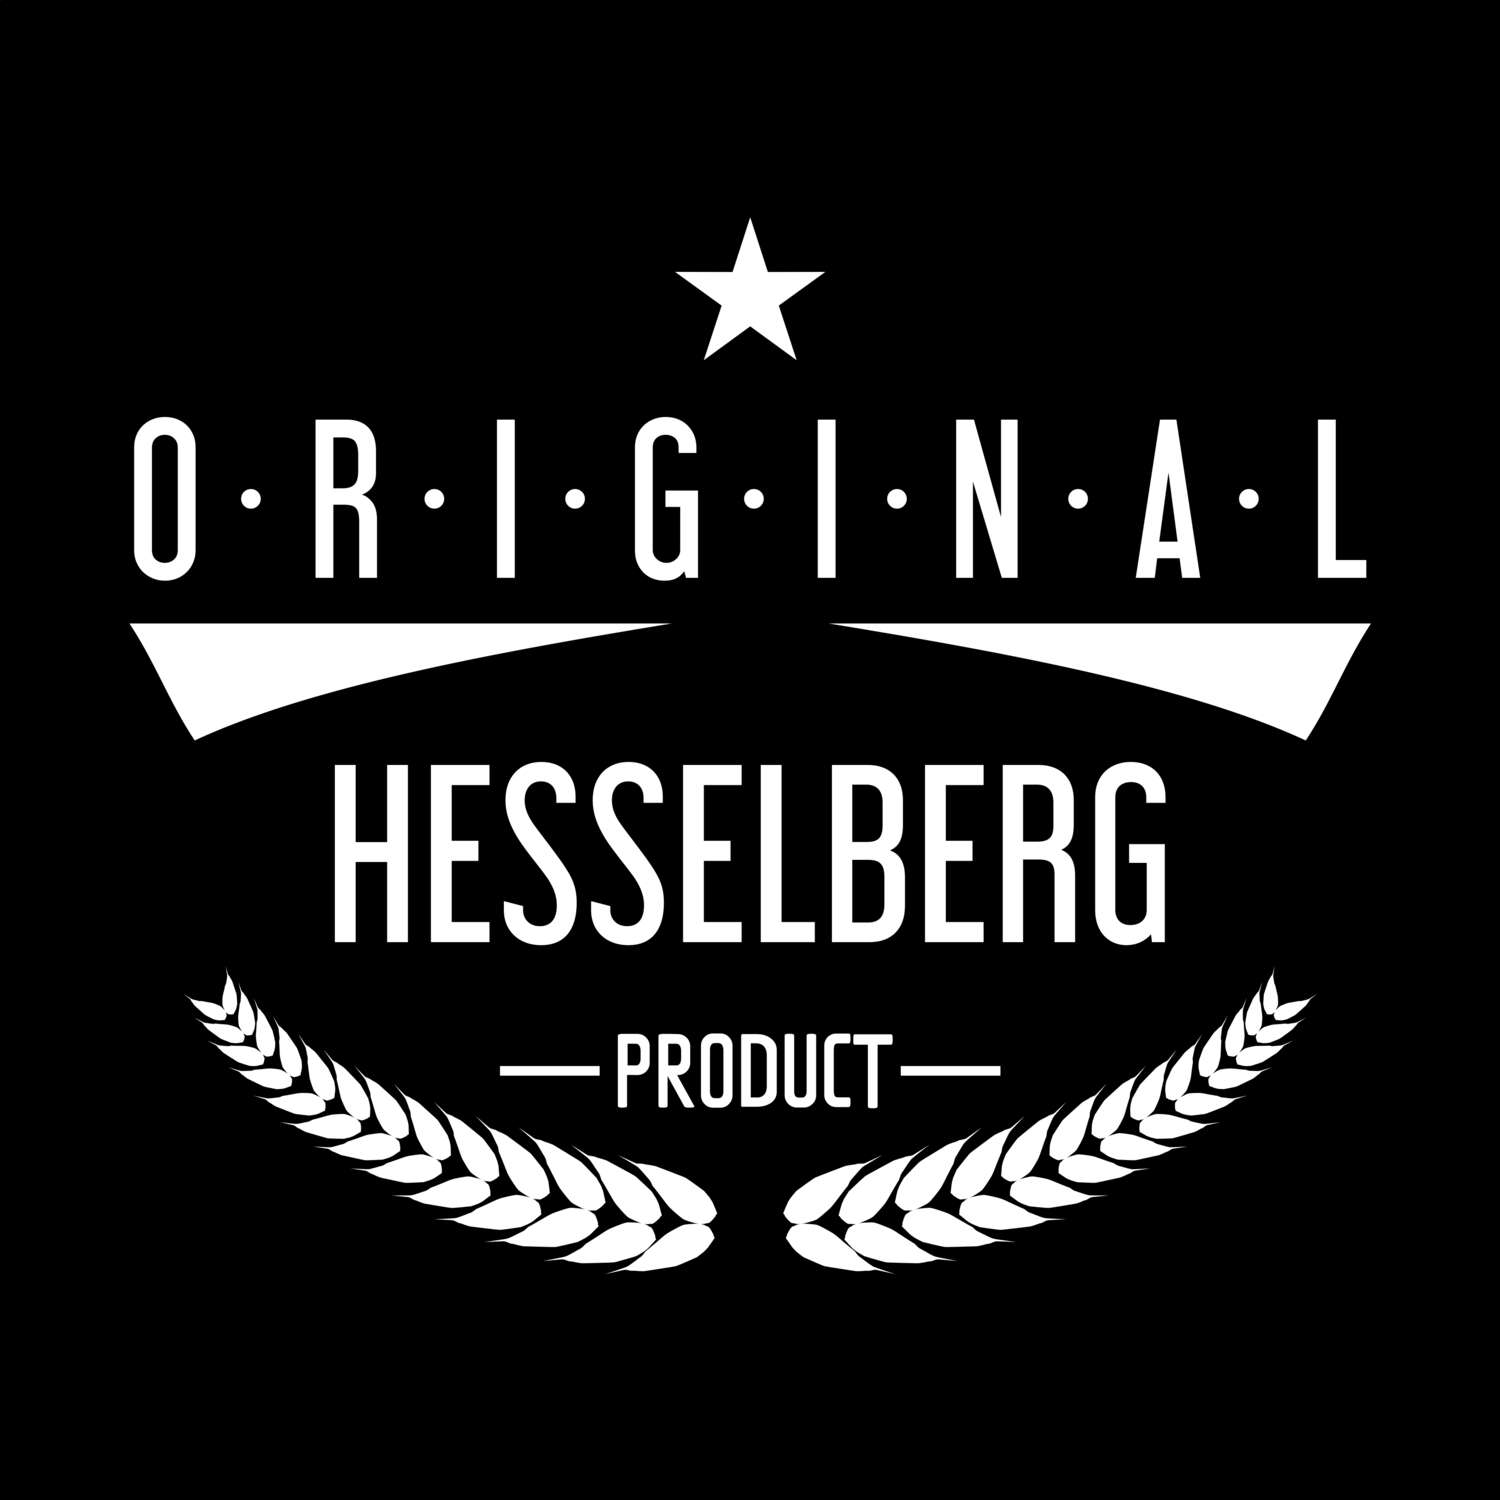 Hesselberg T-Shirt »Original Product«